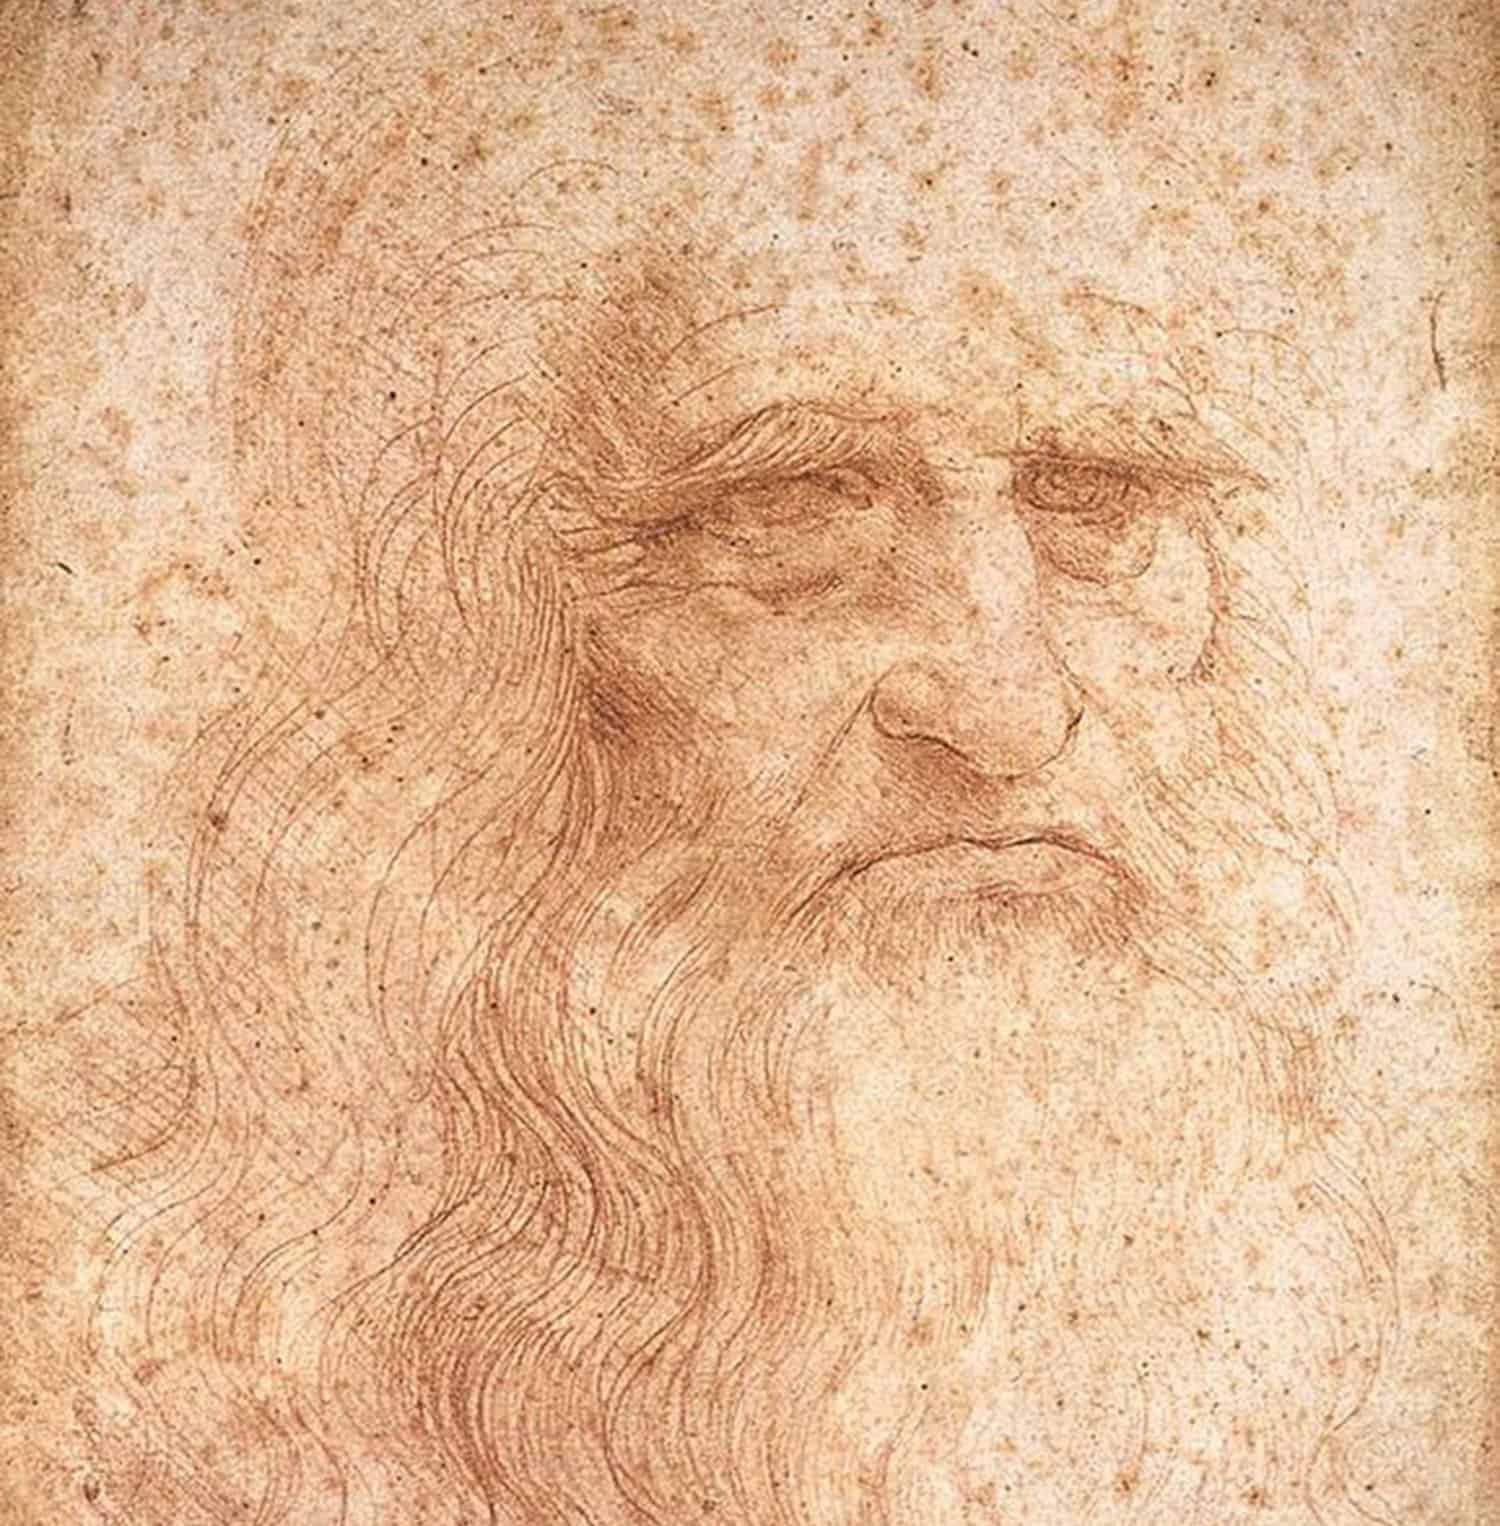 Leonardo da Vinci Portrait